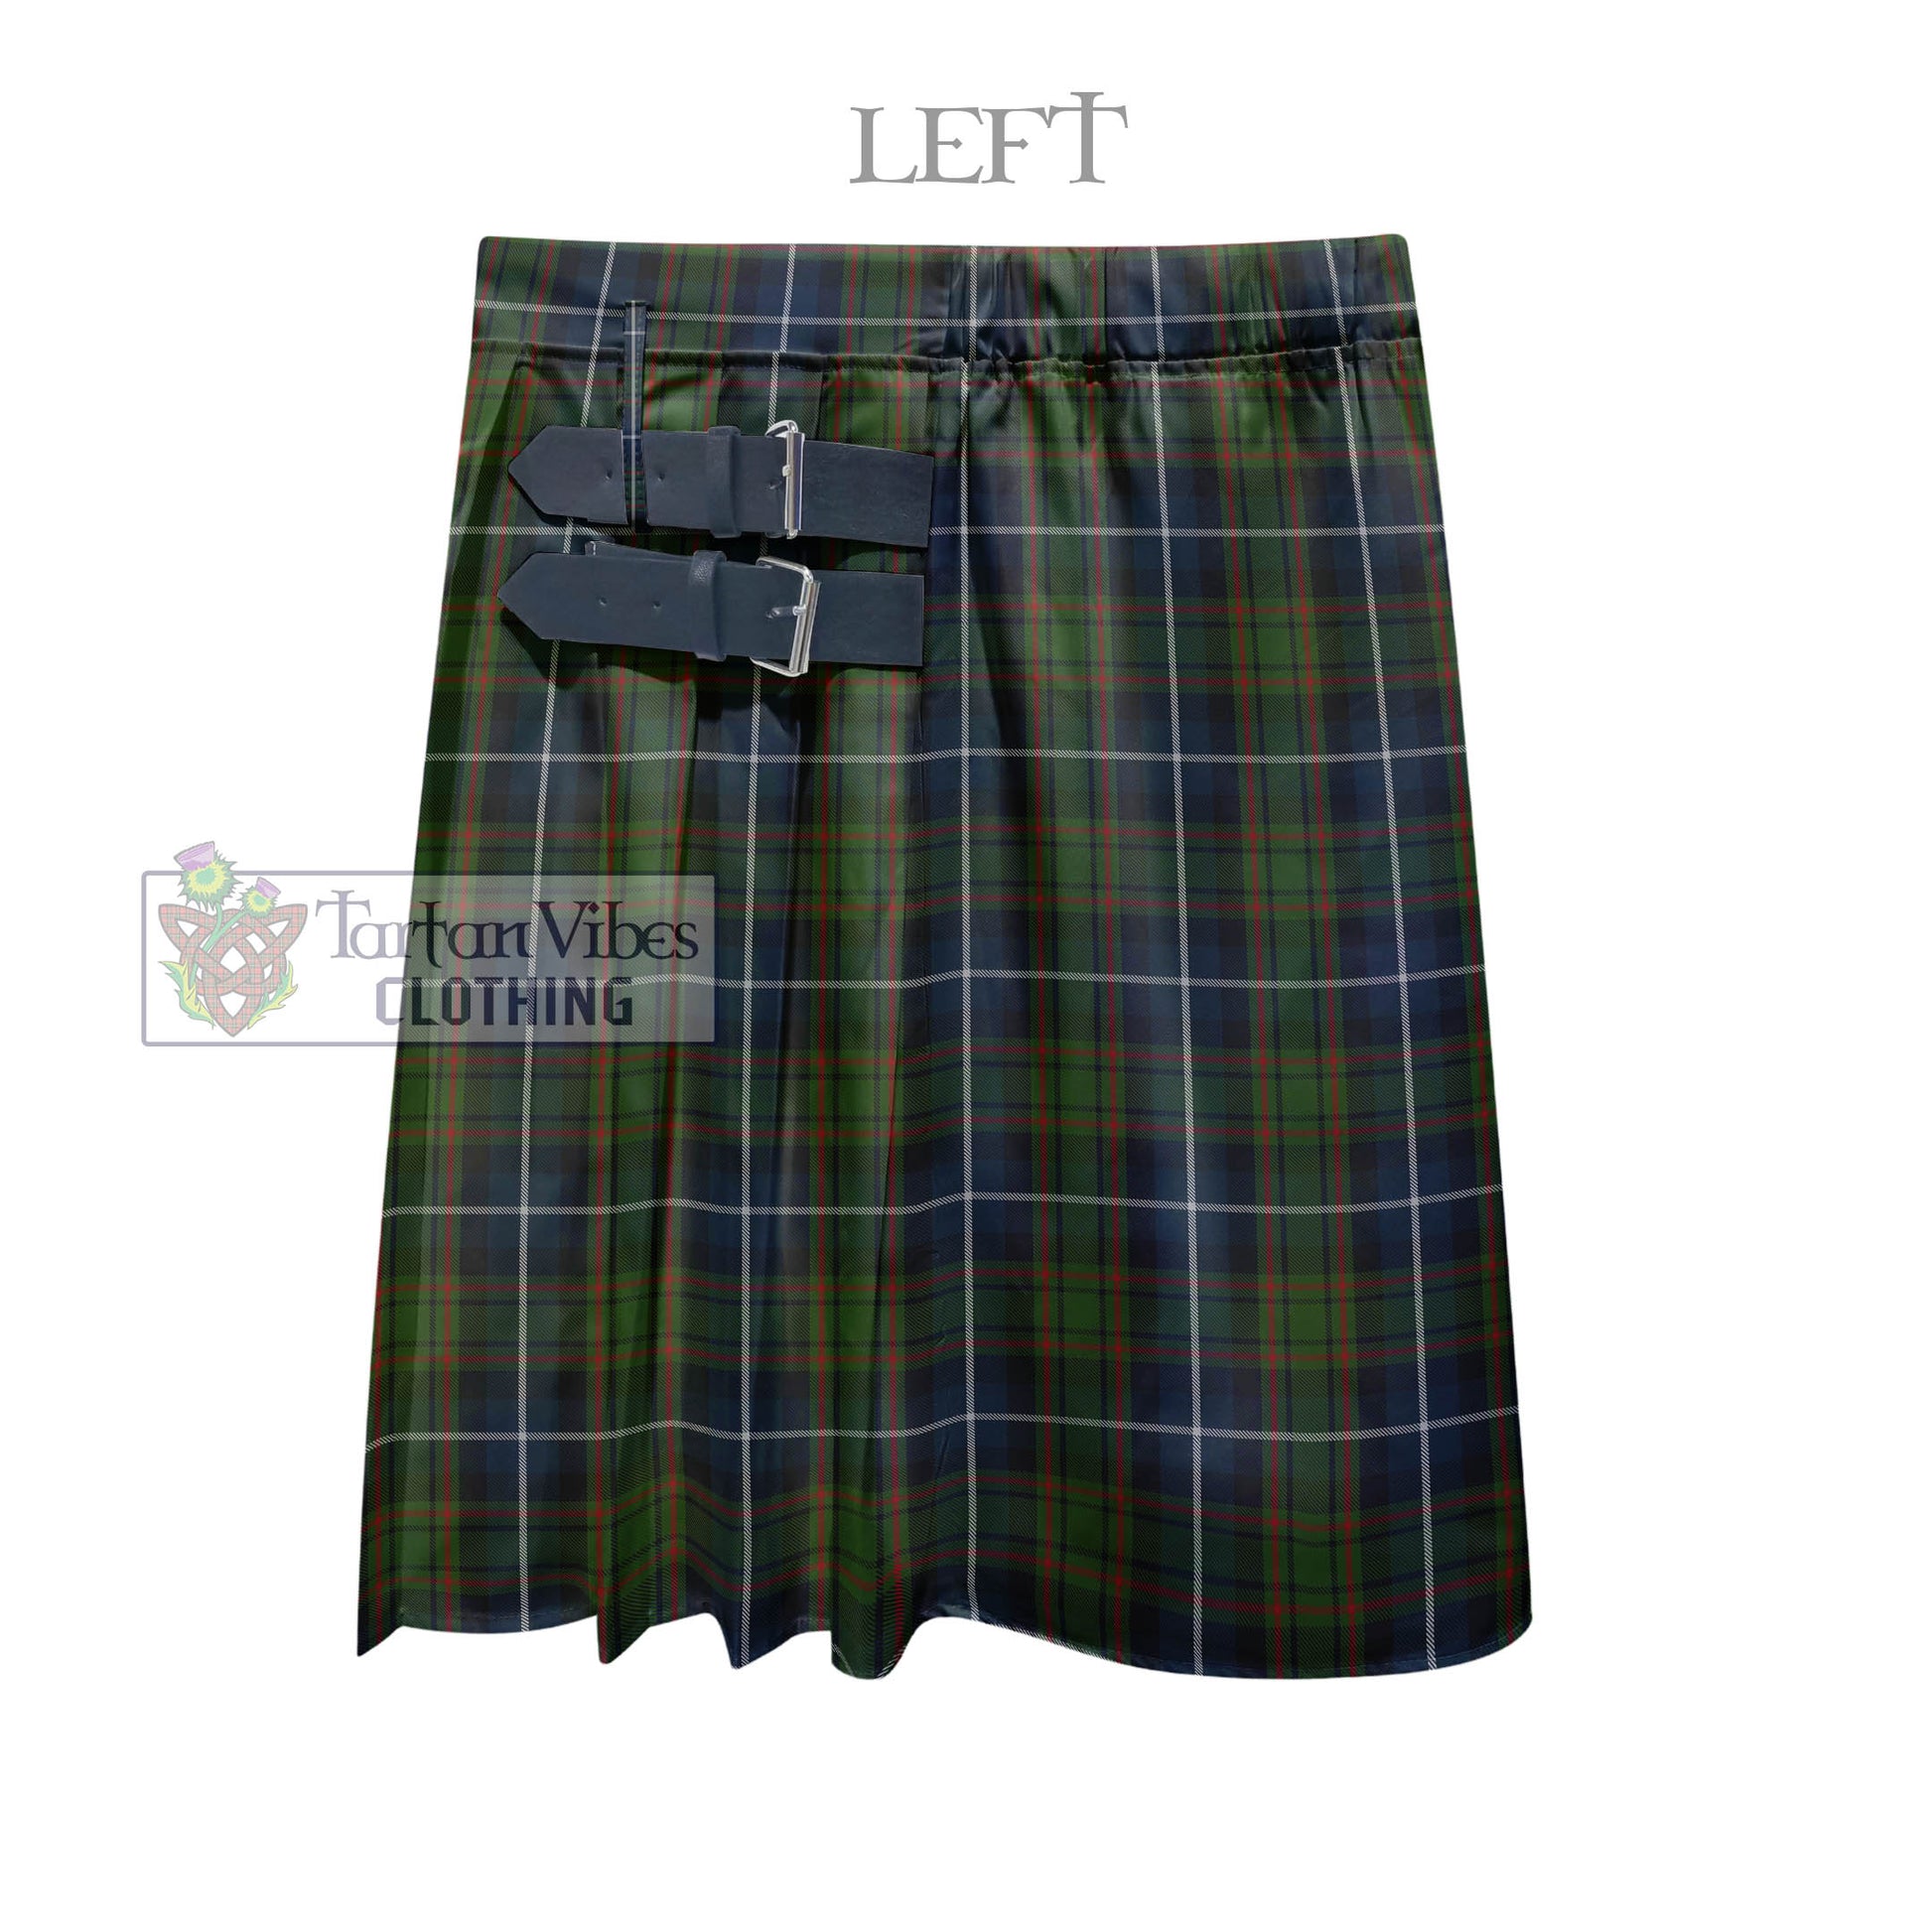 Tartan Vibes Clothing MacRae Hunting Tartan Men's Pleated Skirt - Fashion Casual Retro Scottish Style